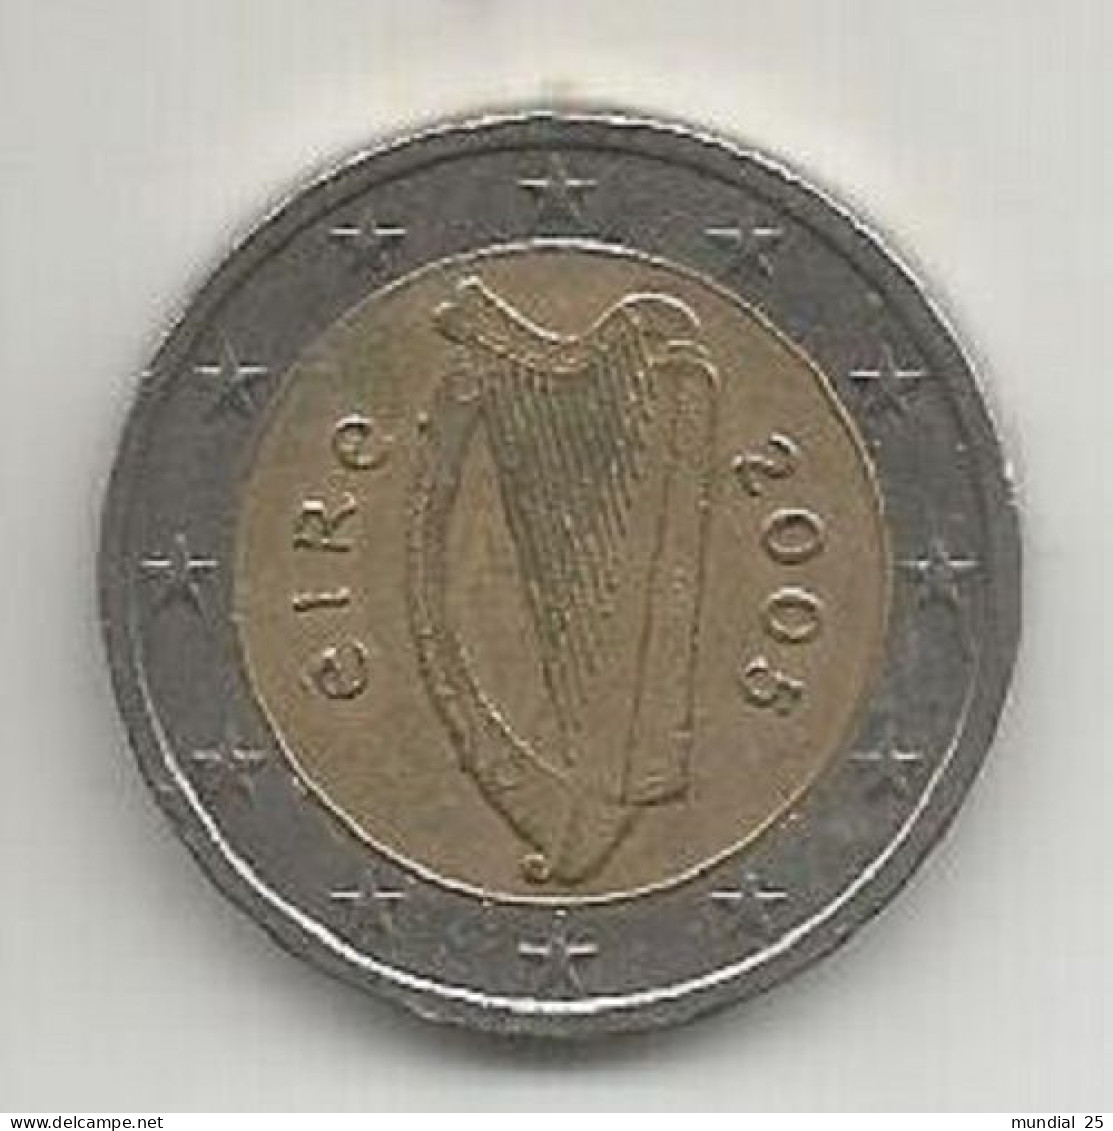 IRELAND 2 EURO 2005 - Ierland